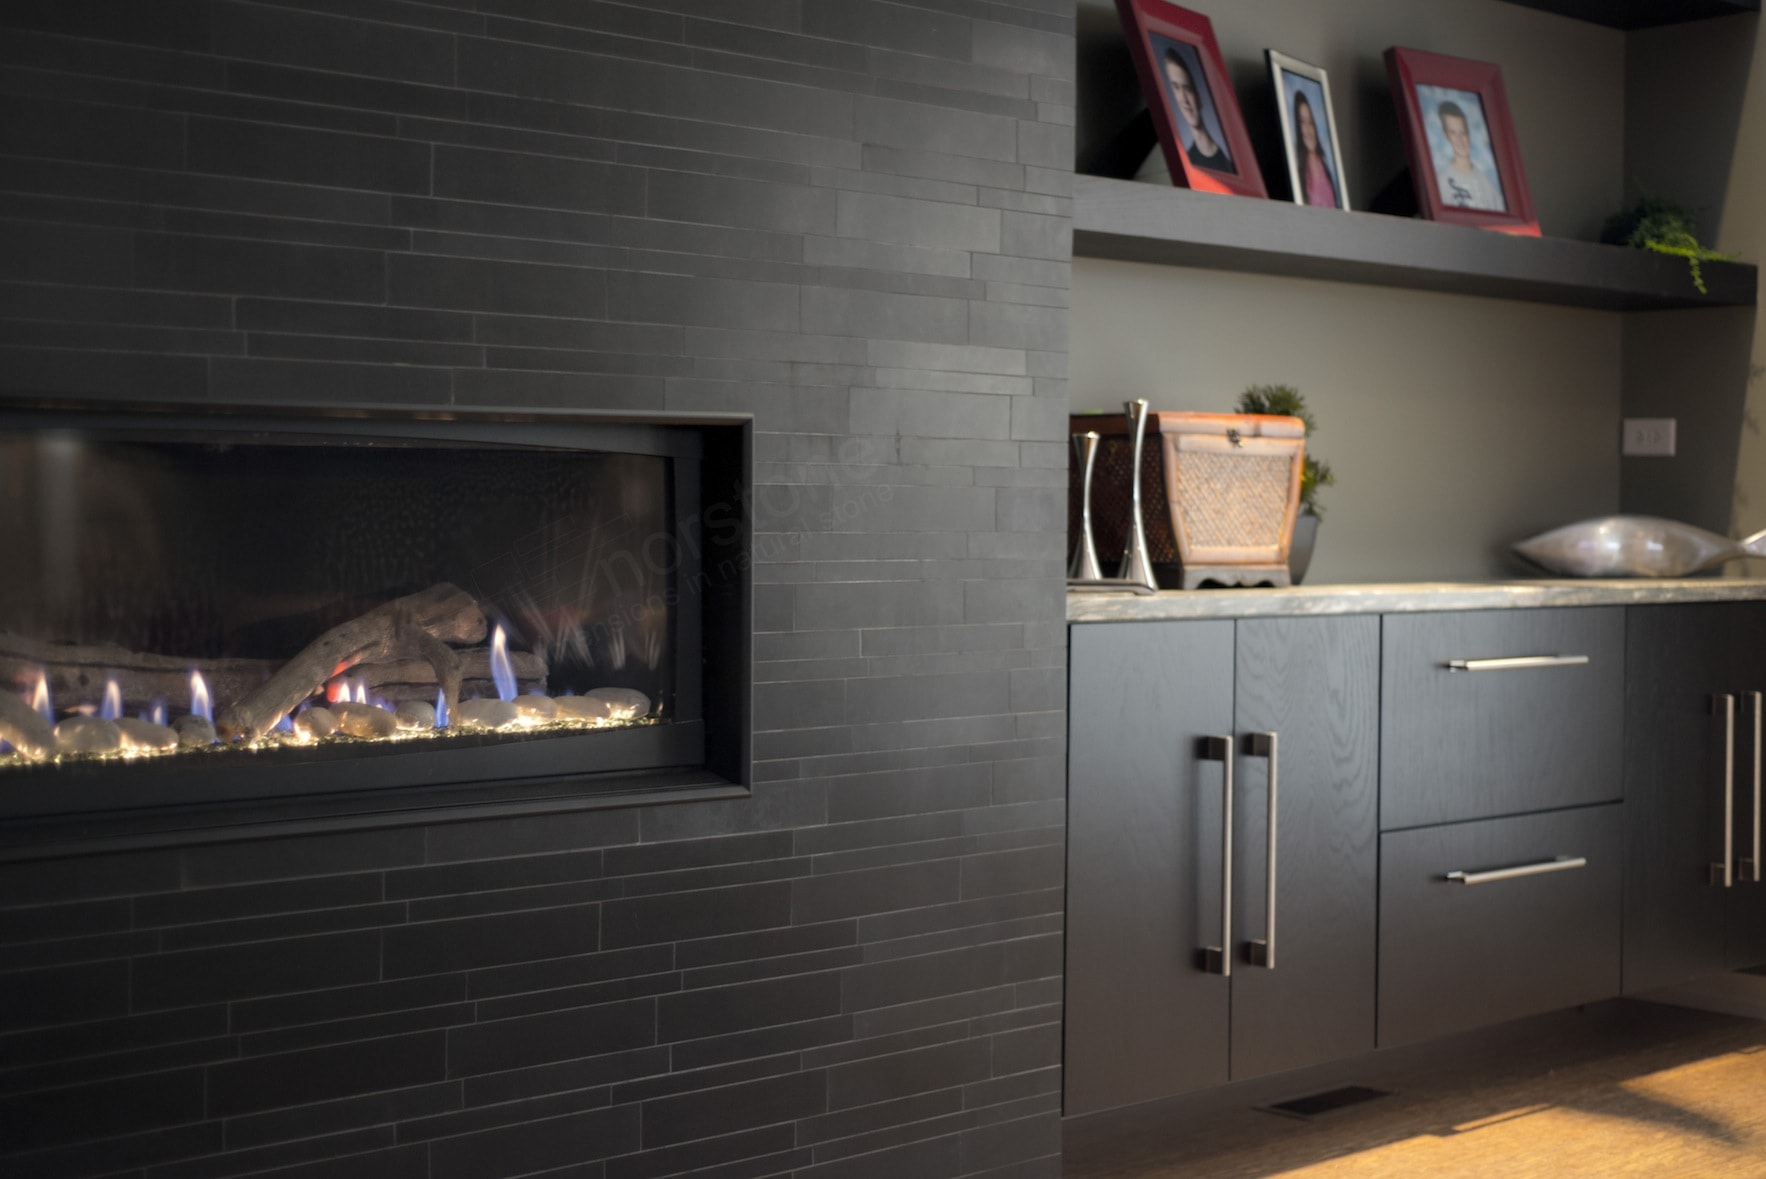 Modern All Glass Fireplace Insert set at waist level on a black stone tile fireplace